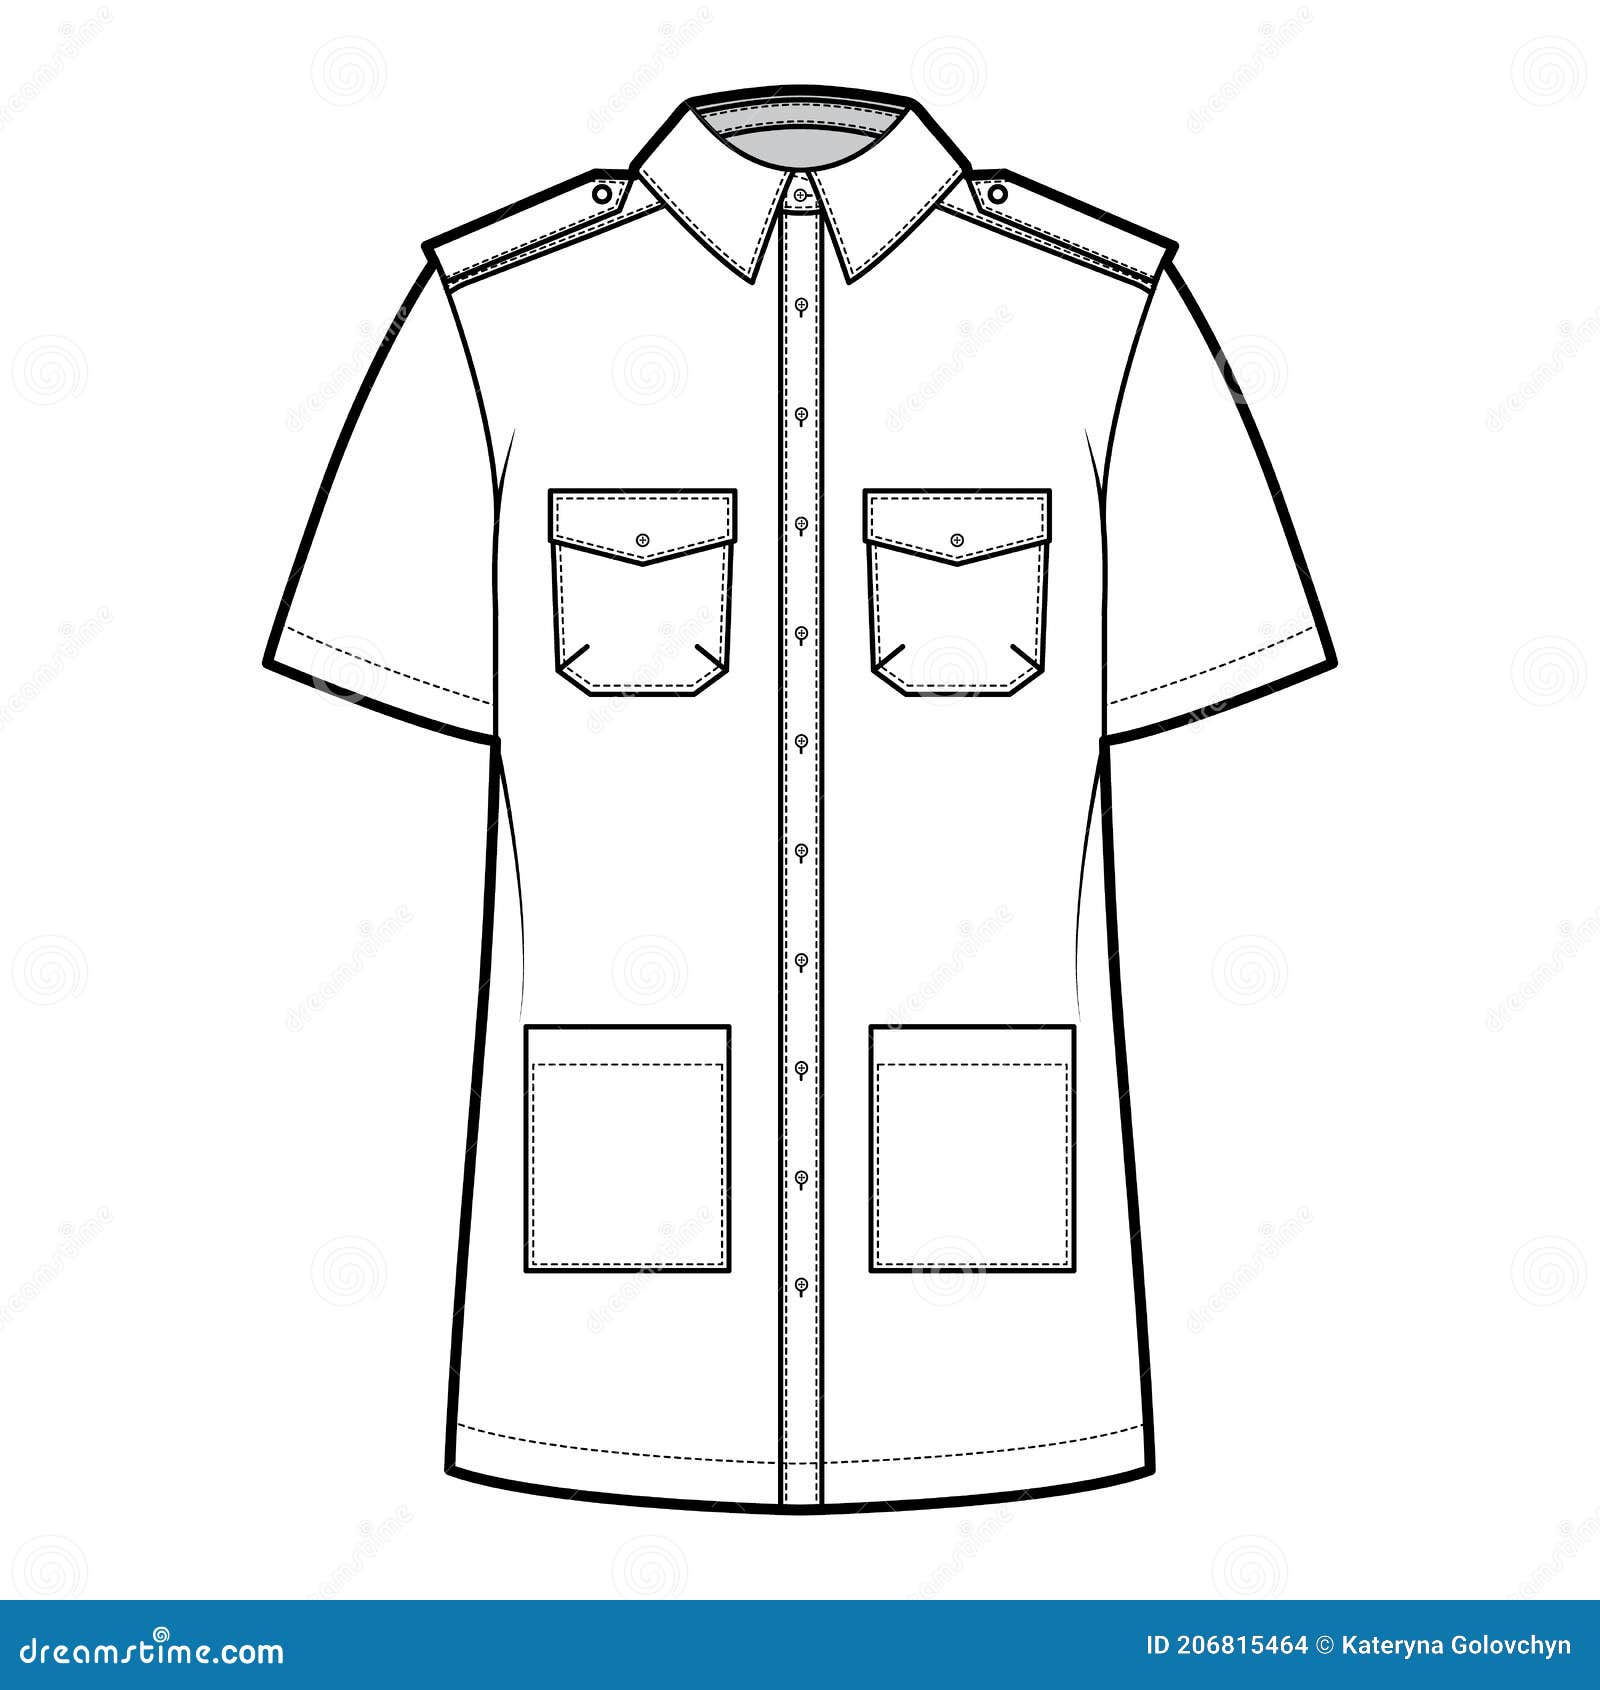 Shirt Safari Technical Fashion Illustration with Short Sleeves, Flaps ...